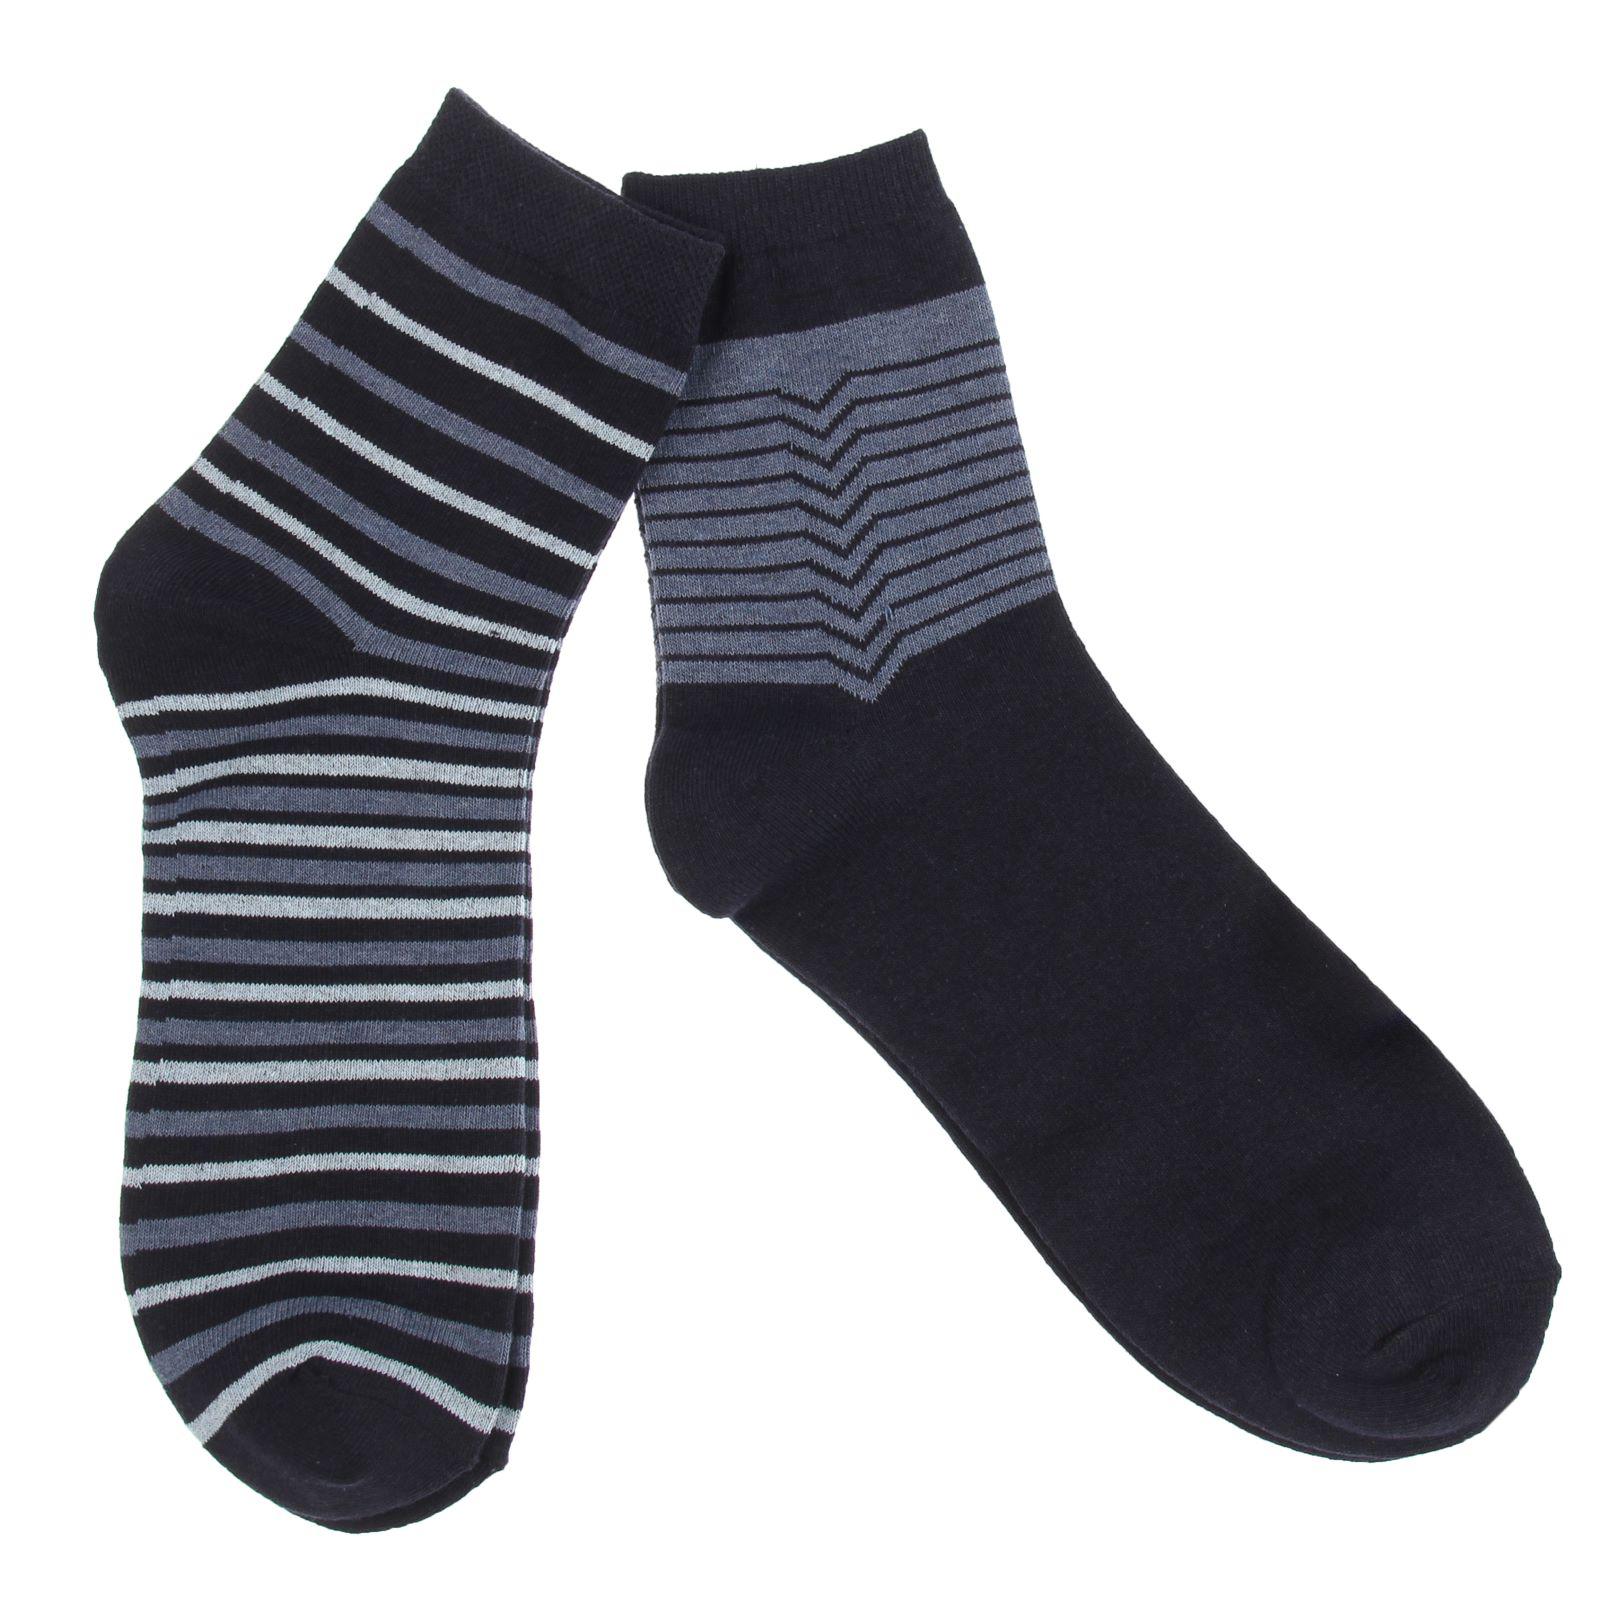 Носочки пара. Socks (2 pairs) (dh6096-904). Носки. Носки мужские. Носки мужские обычные.